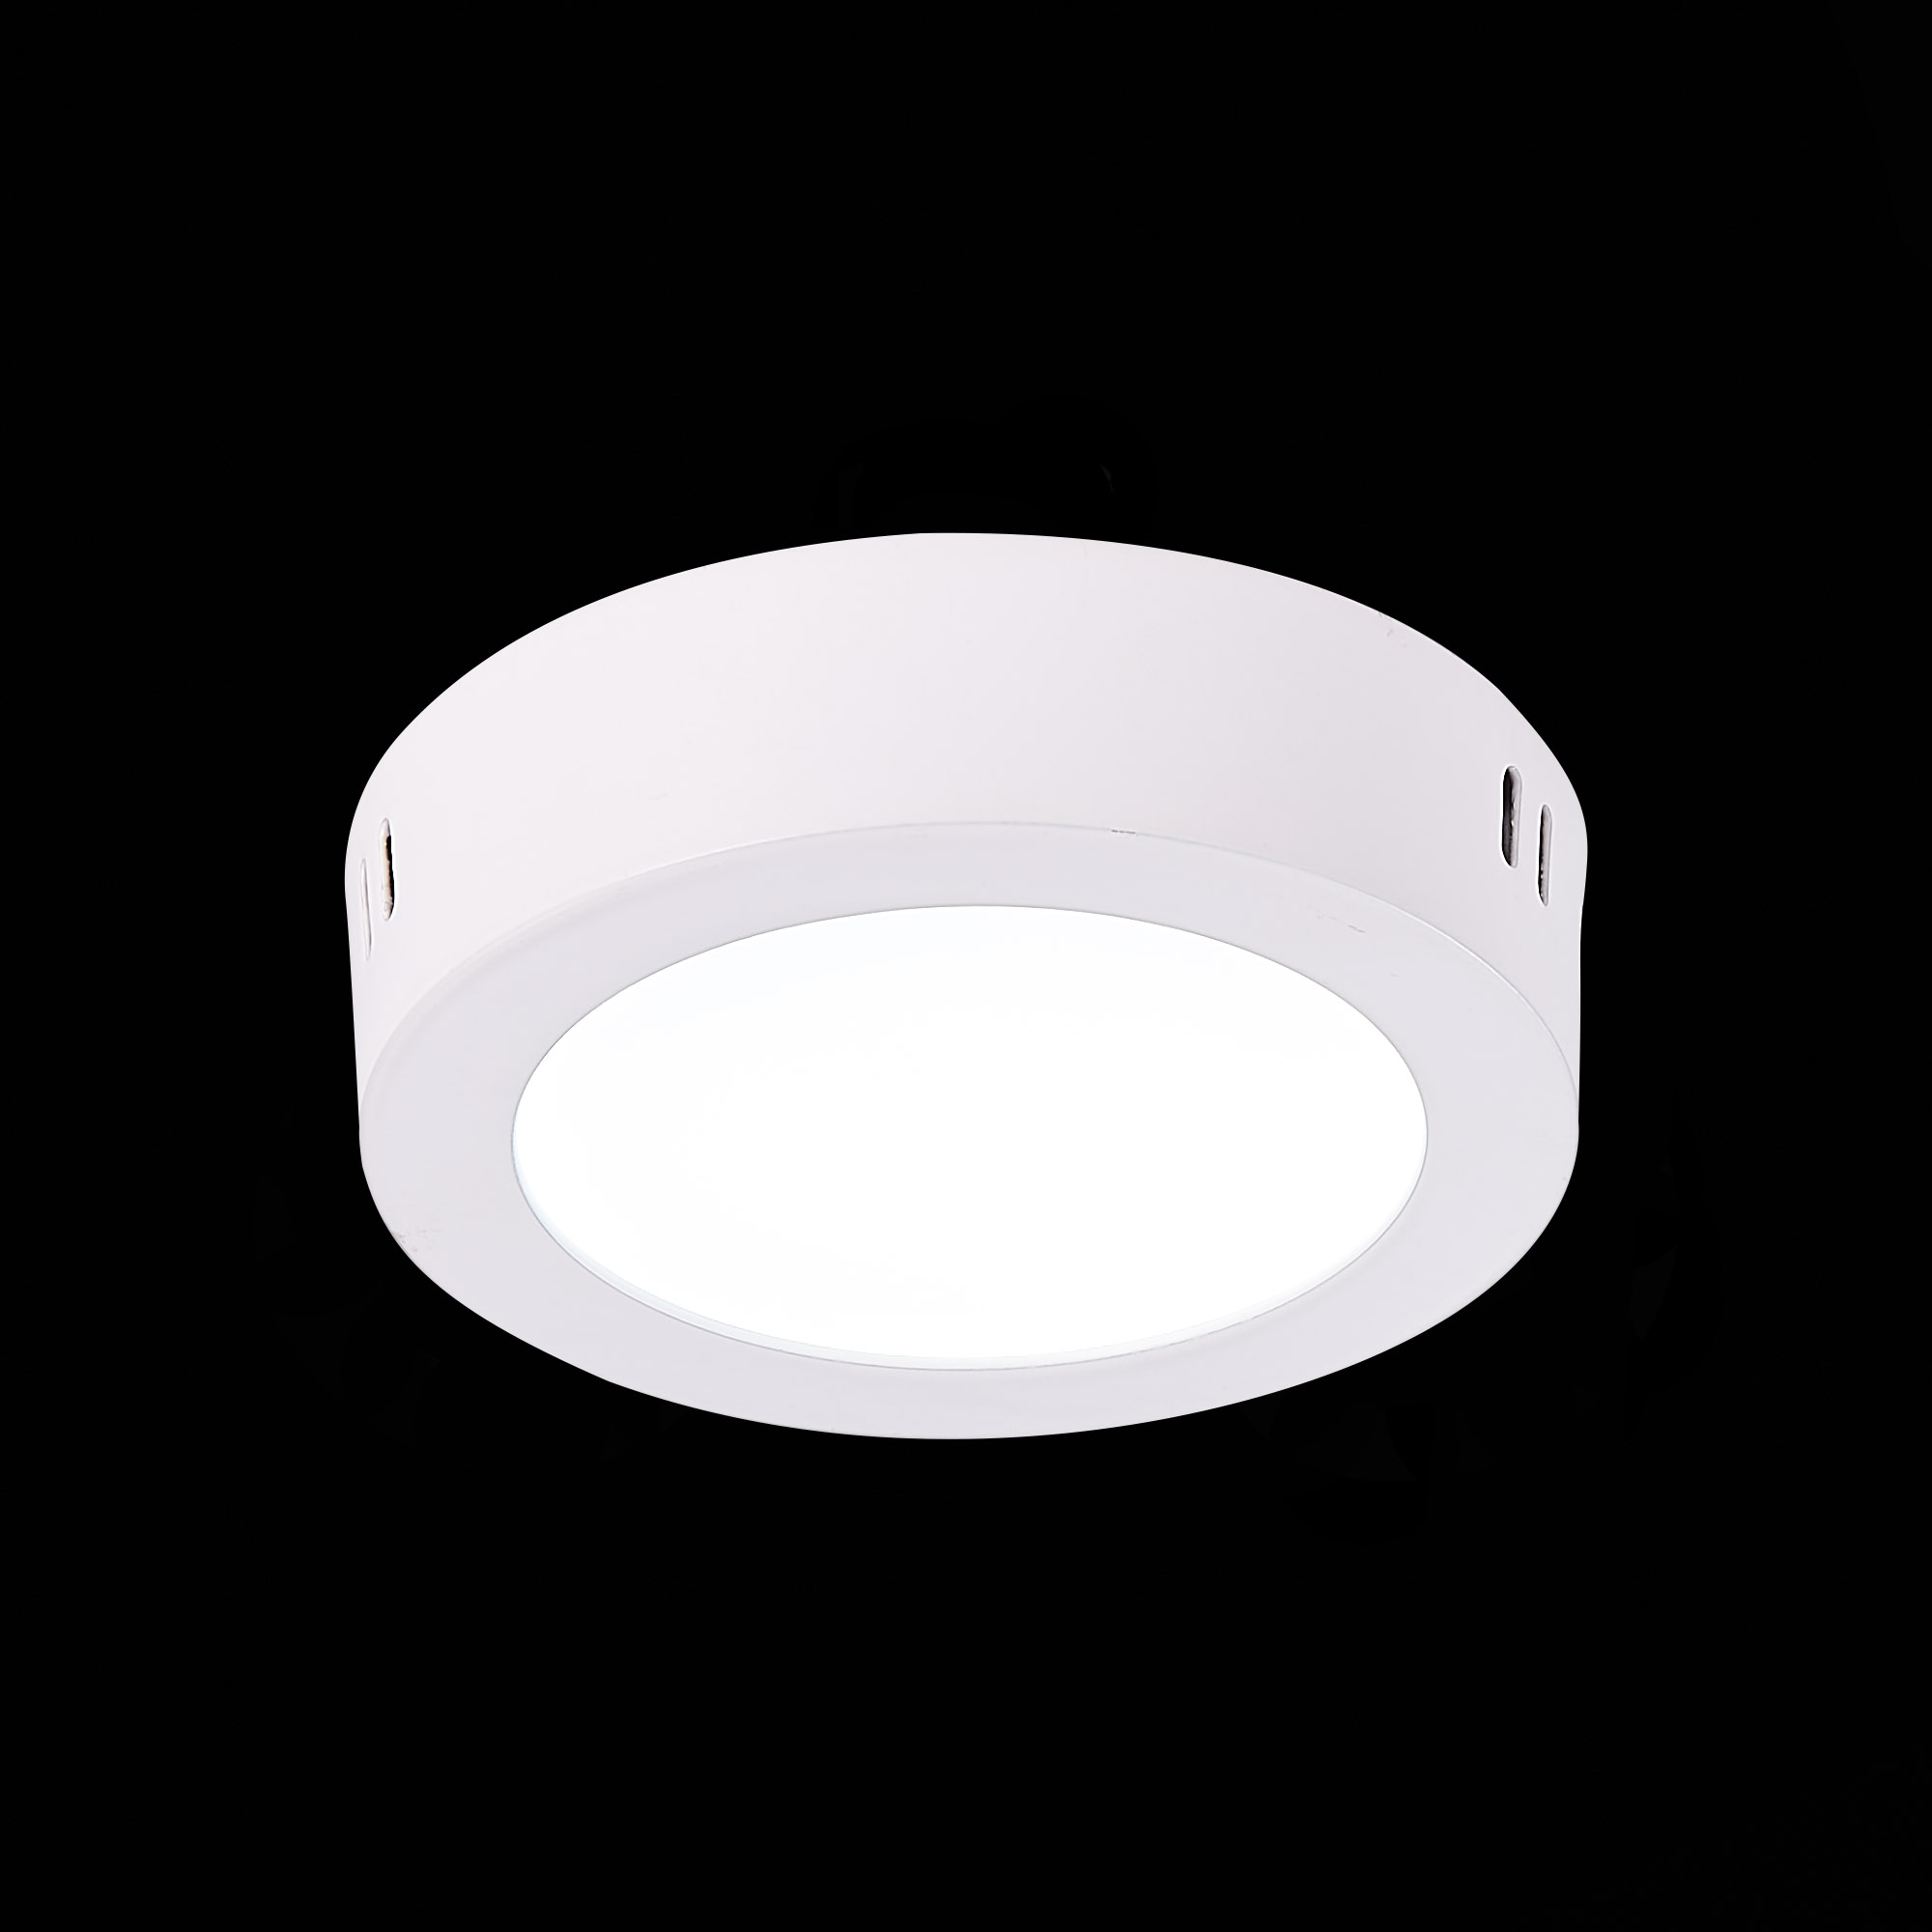 светильник настенно-потолочный st luce st112.532.06, артикул ST112.532.06